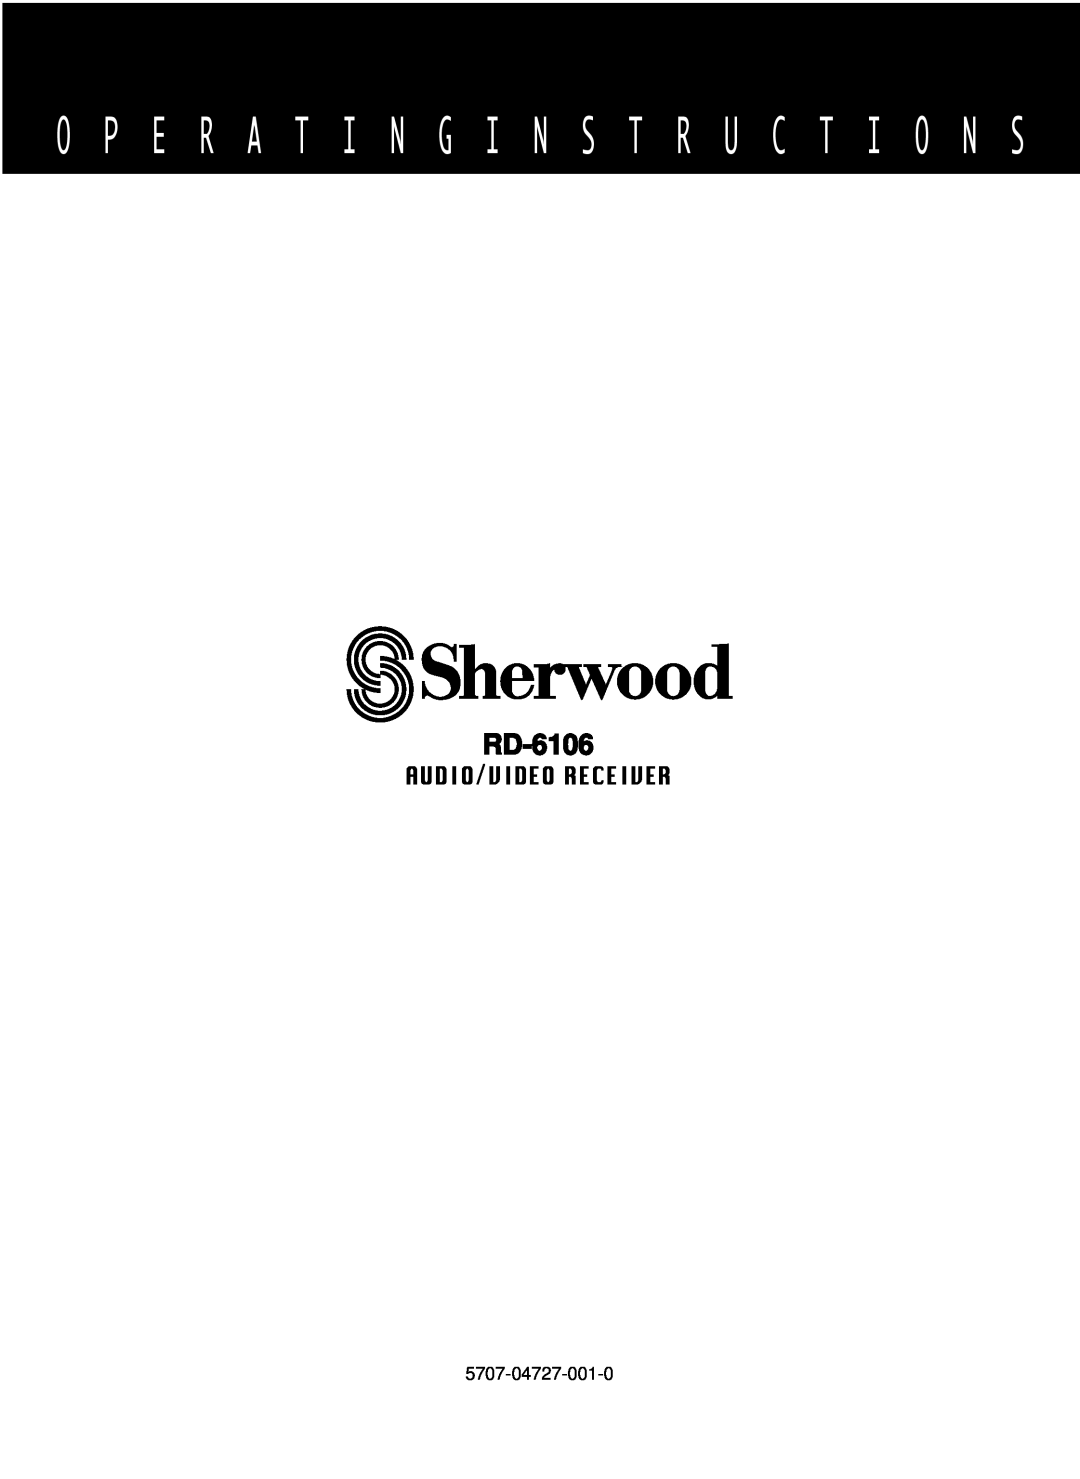 Sherwood RD-6106 manual O P E R A T I N G I N S T R U C T I O N S, Audio/Video Receiver 